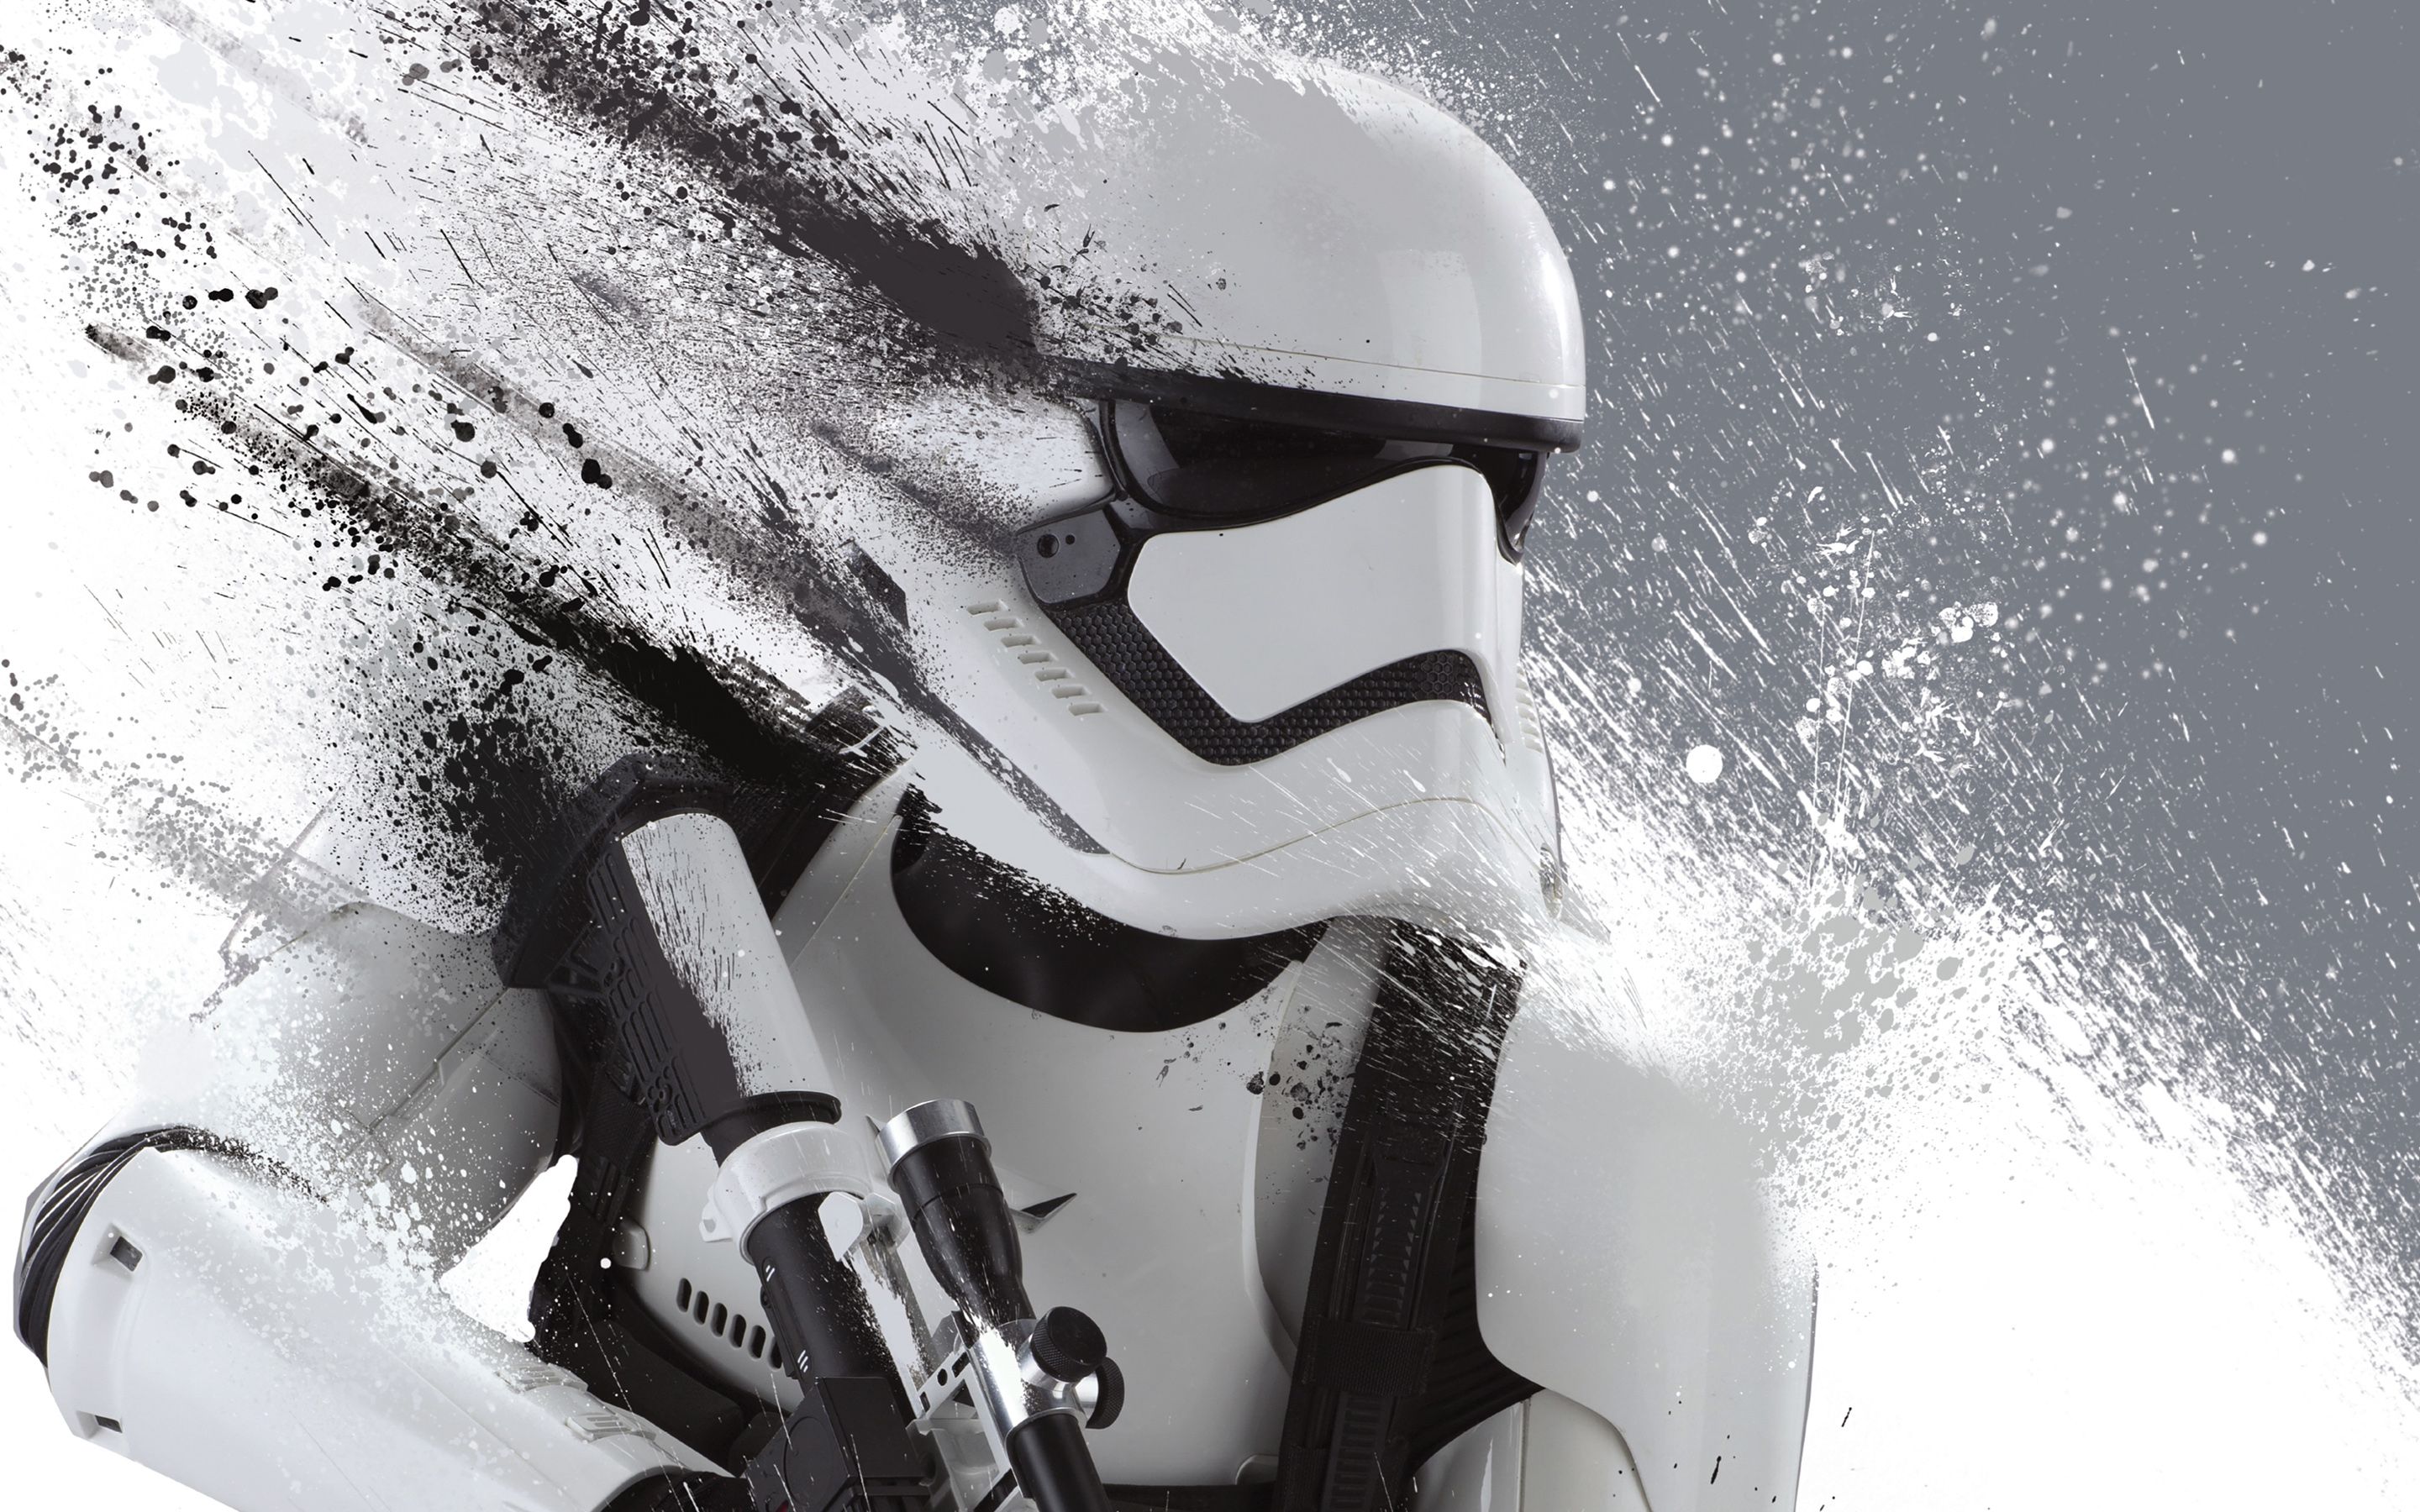 Star Wars Stormtrooper Wallpaper Free Star Wars Stormtrooper Background